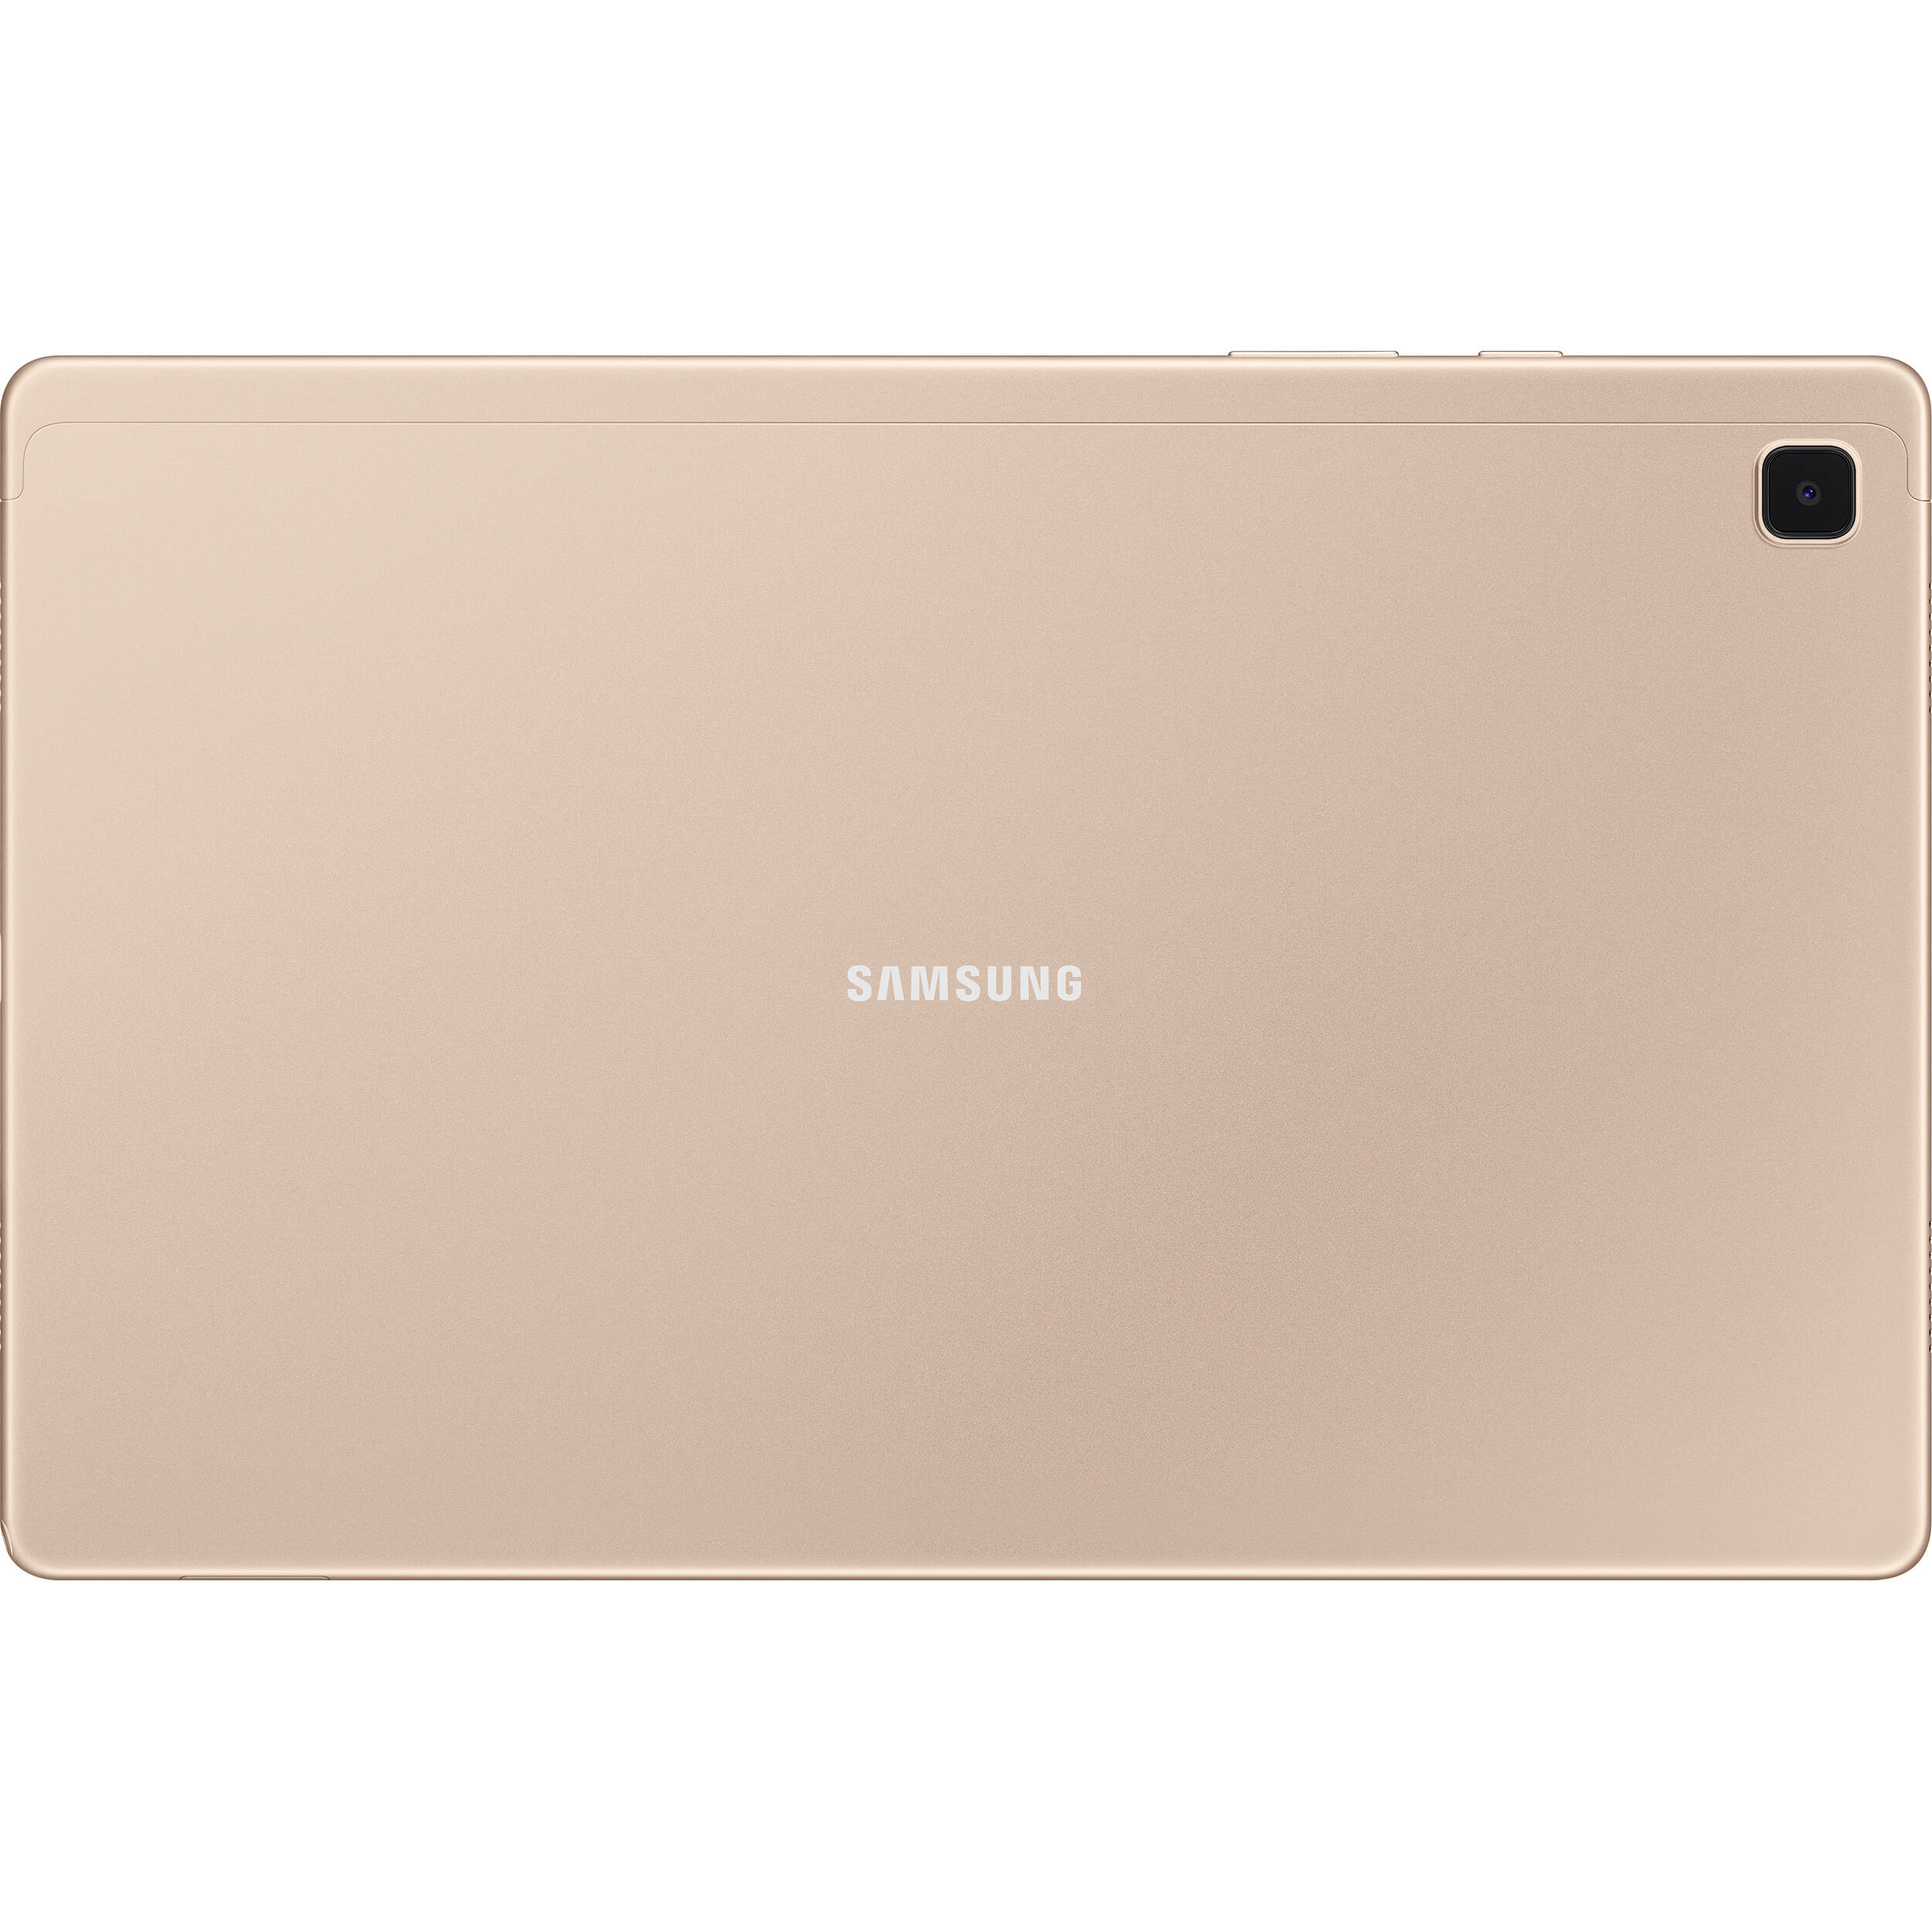 SAMSUNG Galaxy Tab A7 32GB 10.4" Wi-Fi Gold - SM-T500NZDAXAR - image 2 of 4